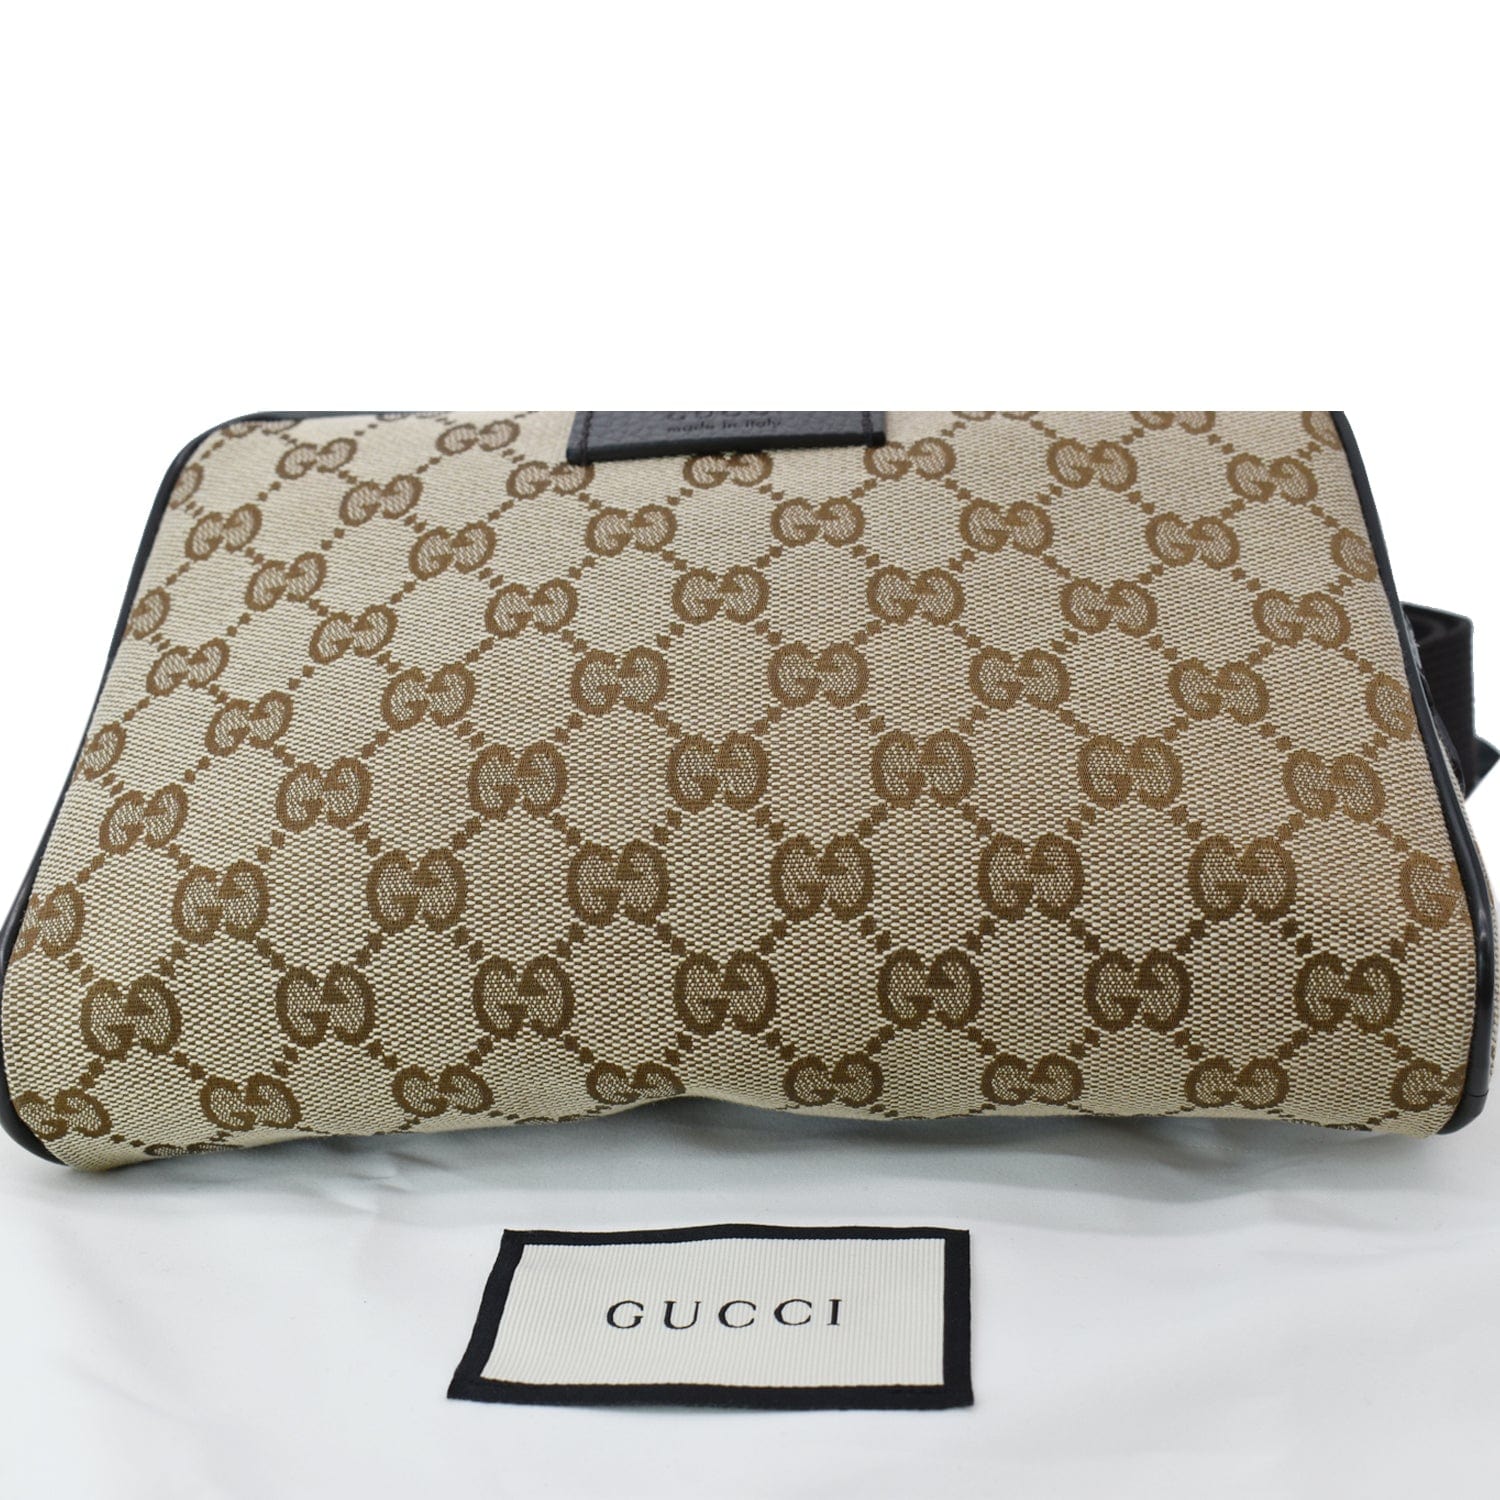 Gucci Original Gg Canvas Belt Bag in Natural